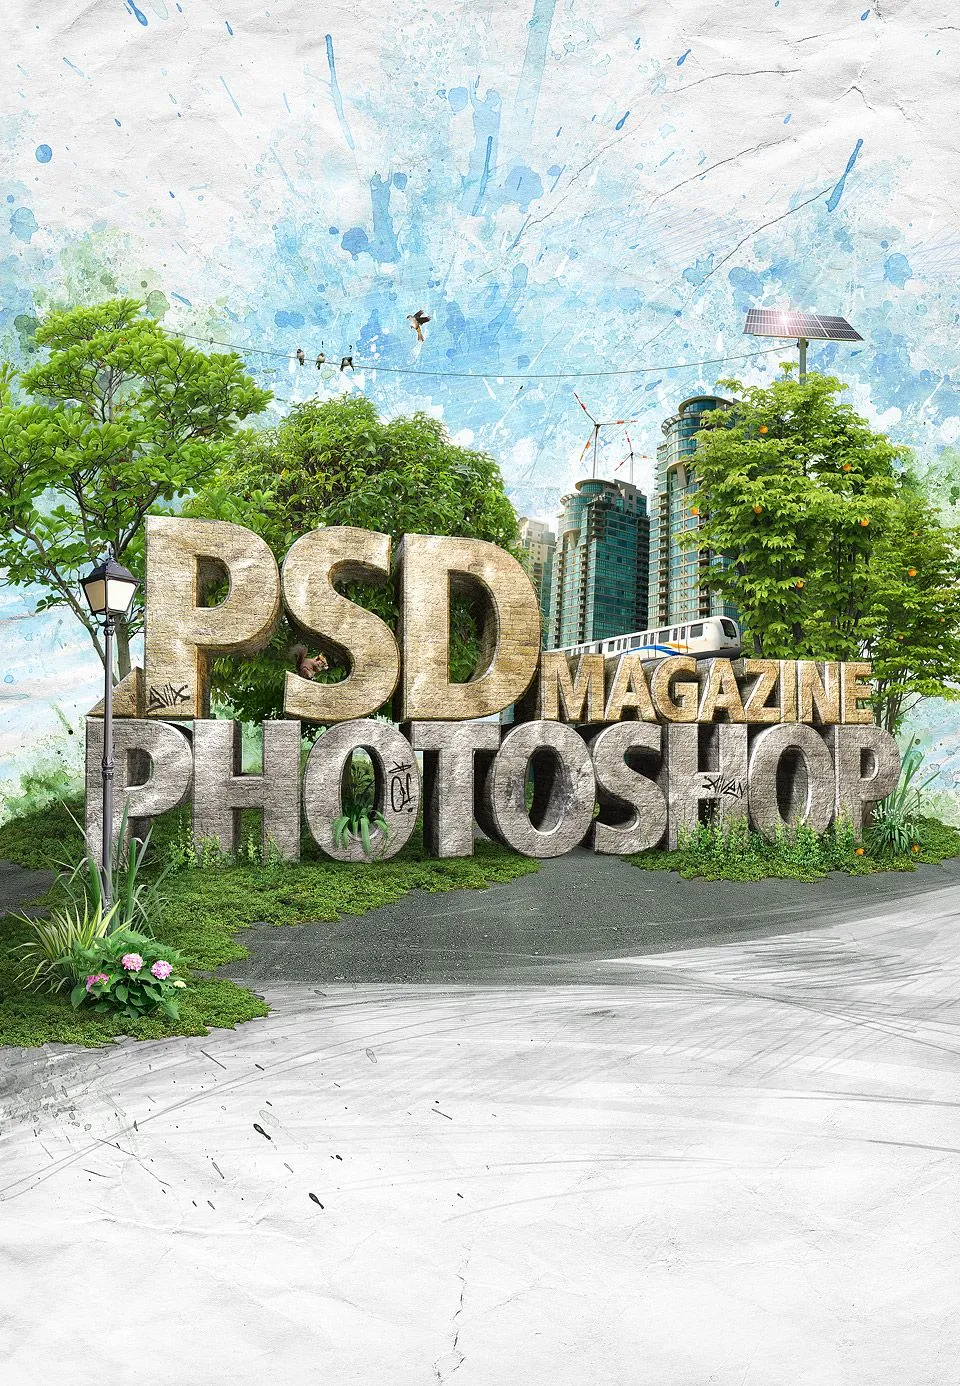 psd Photoshop Magazine by aiiven on DeviantArt